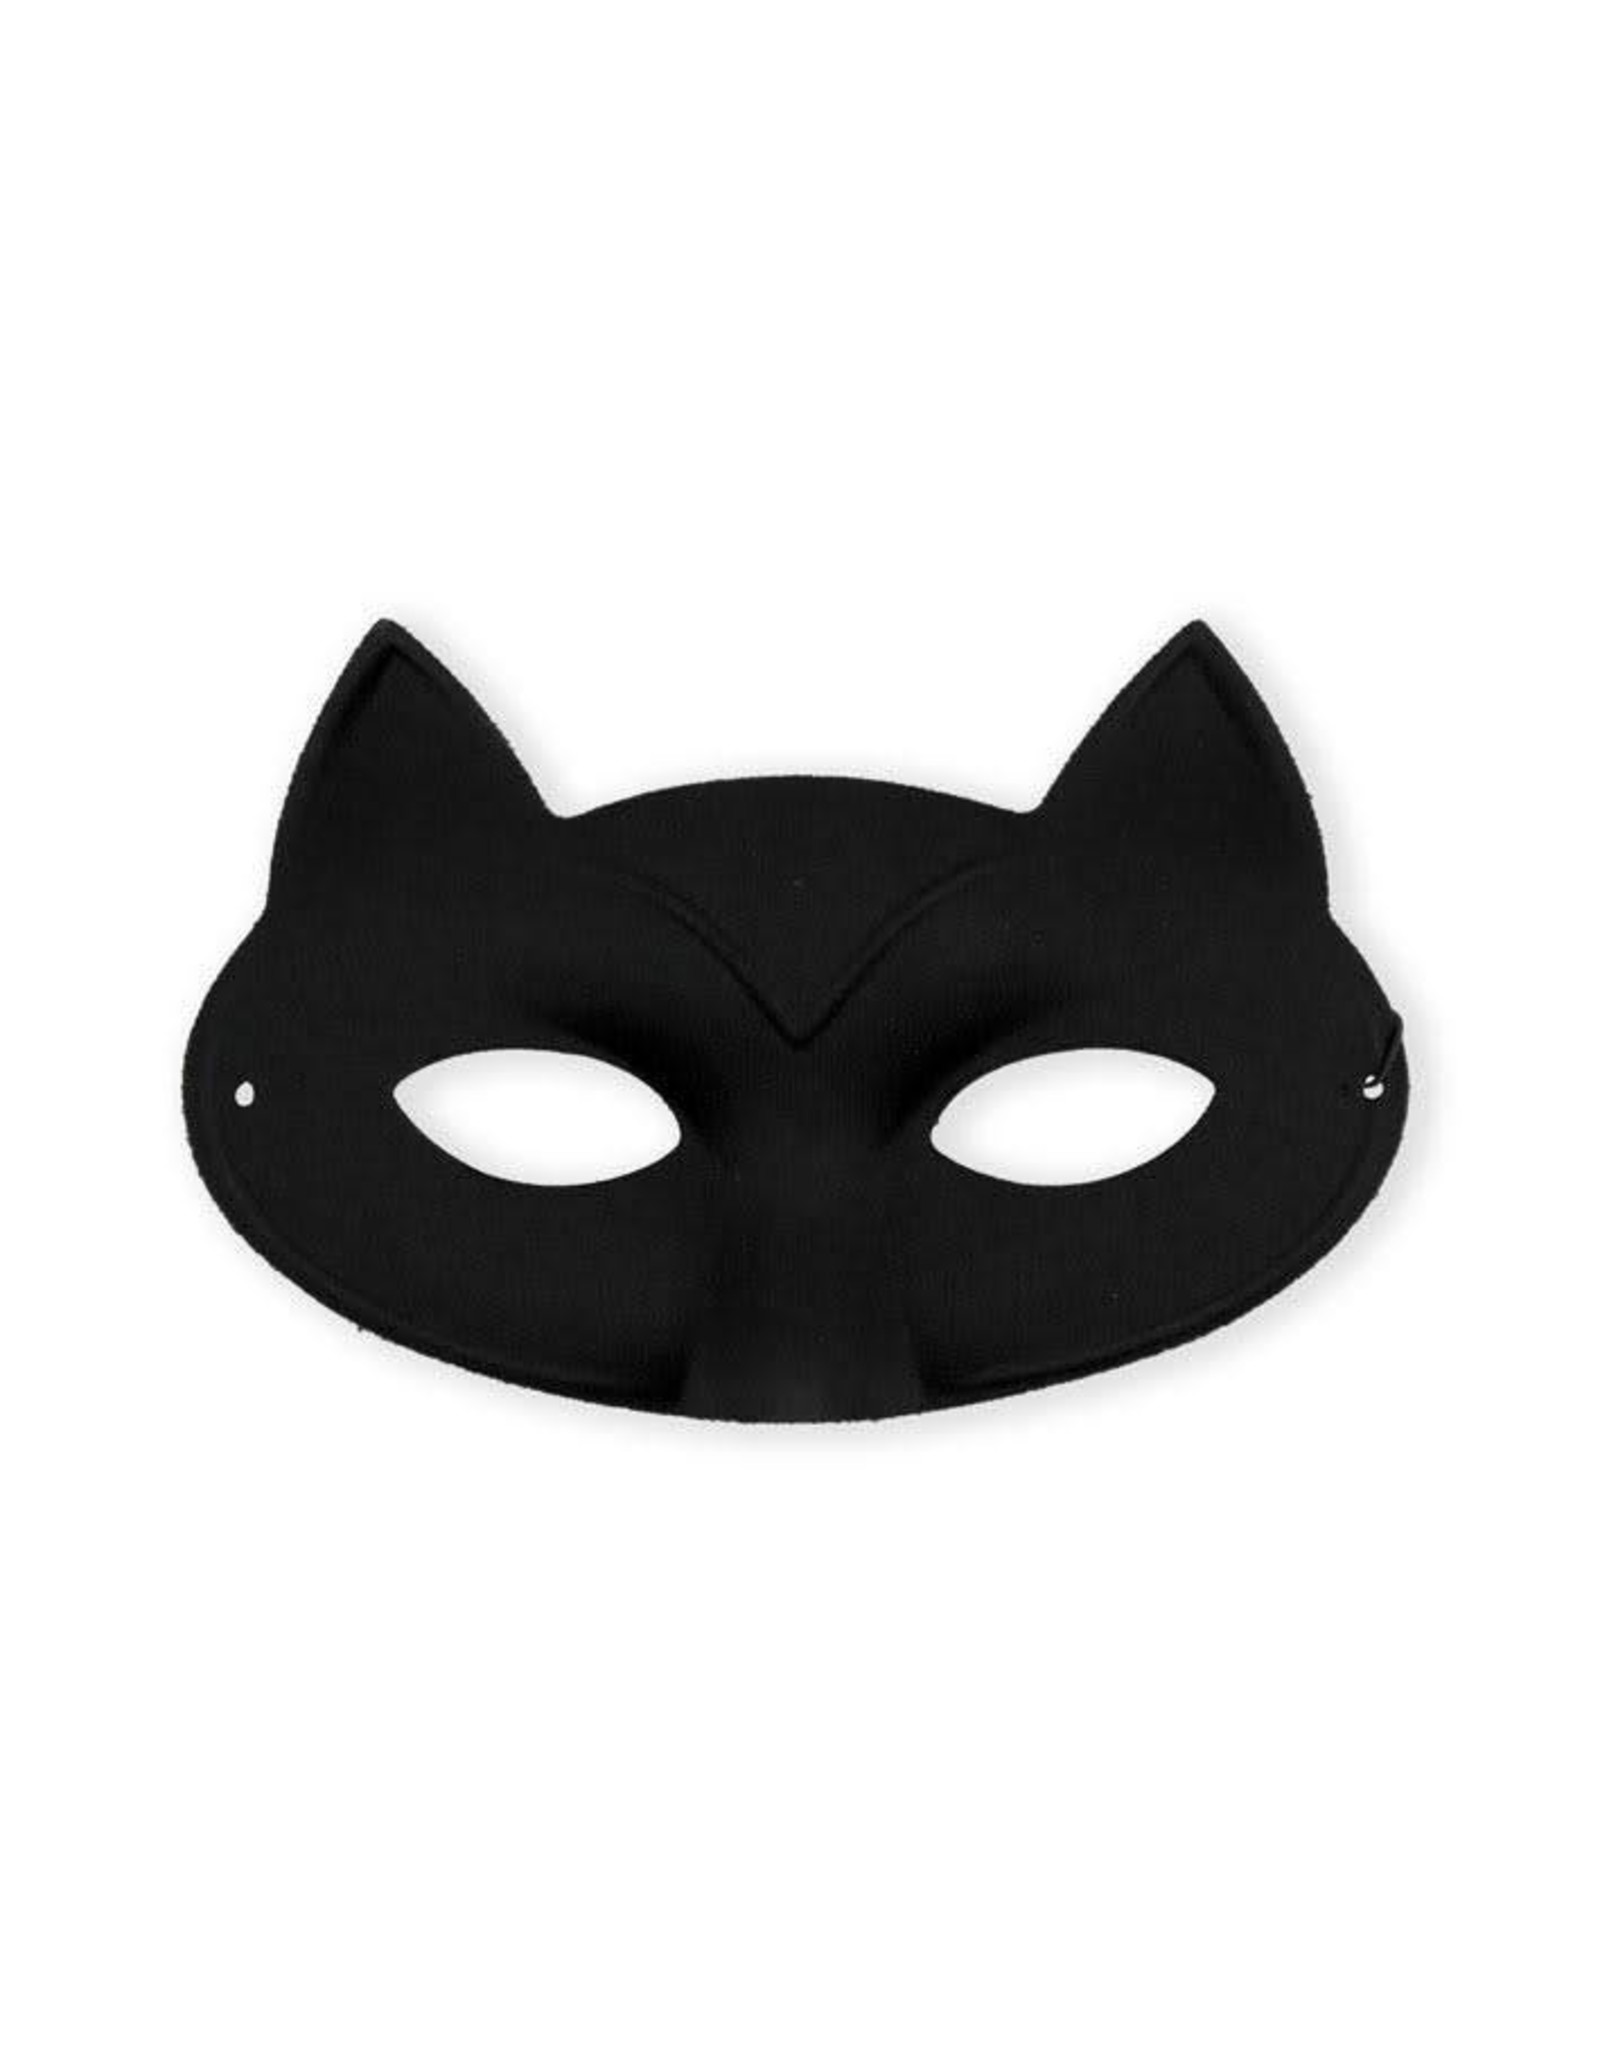 Oogmasker Kat zwart